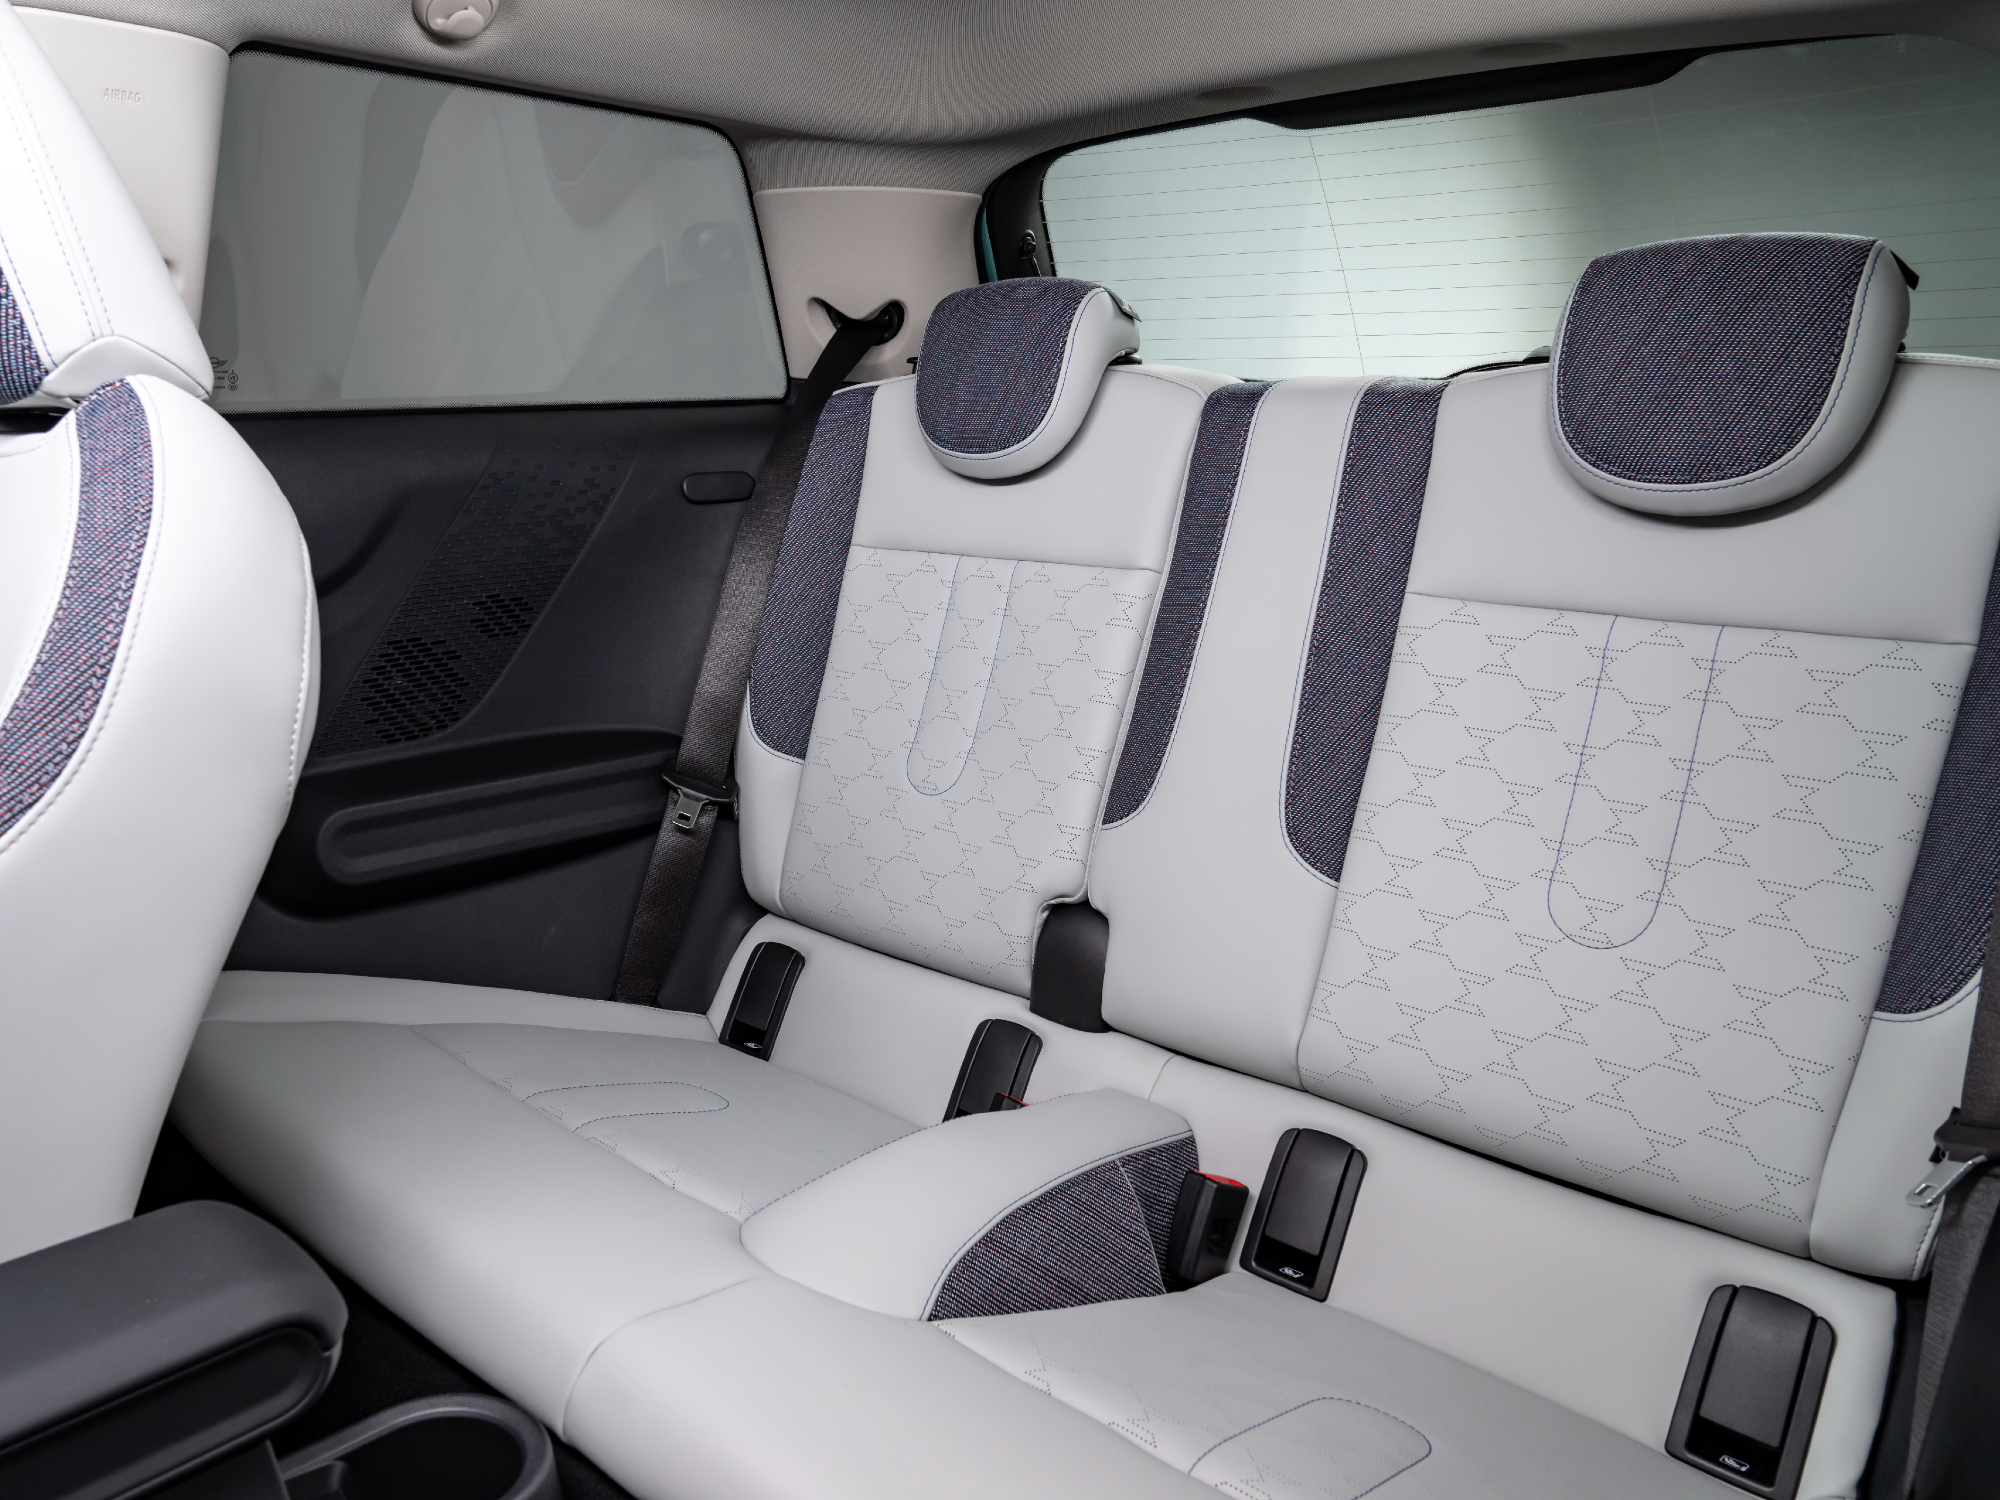 2025 Mini Cooper S rear seats.